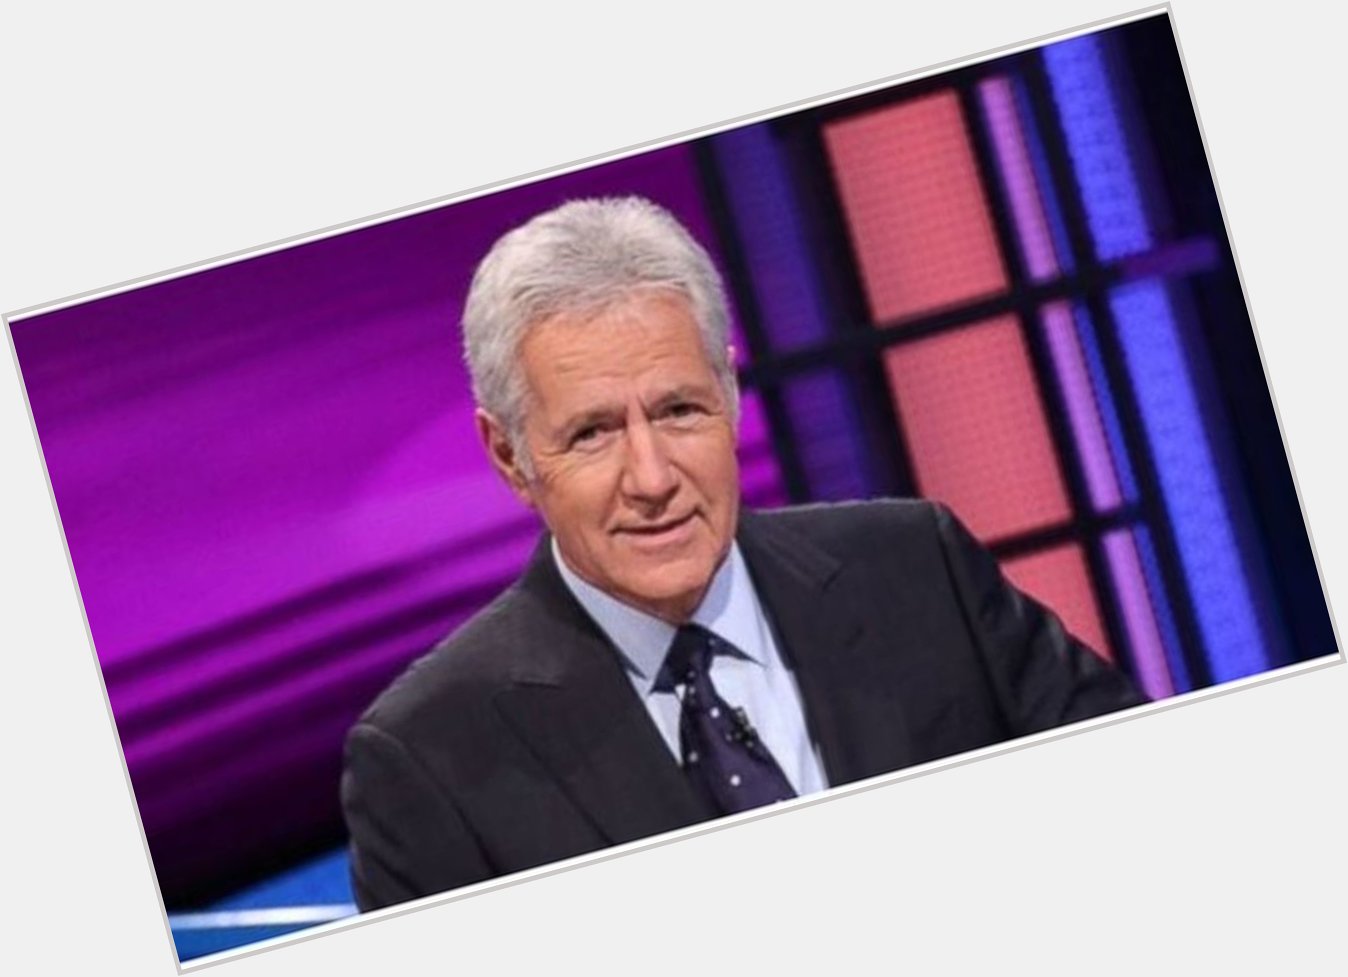 Happy birthday, Alex Trebek! The Jeopardy! host turns 79 today. 